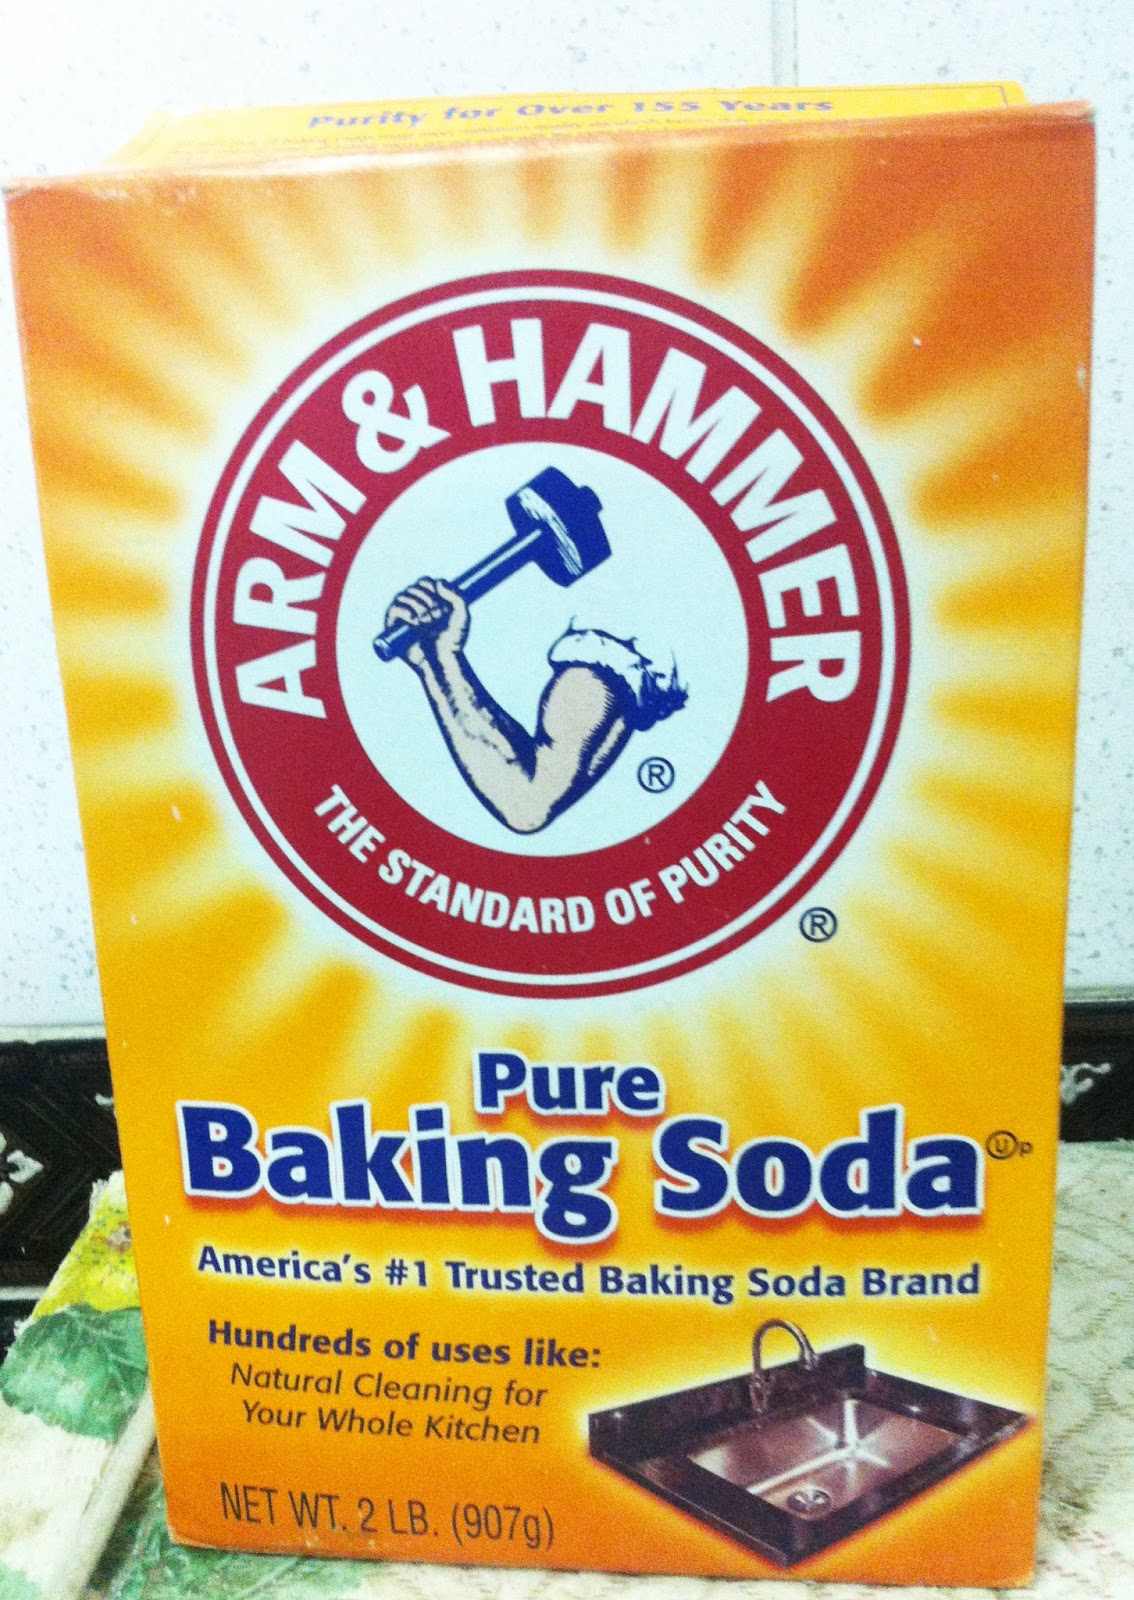 The Arm & Hammer Baking Soda | The Vanity